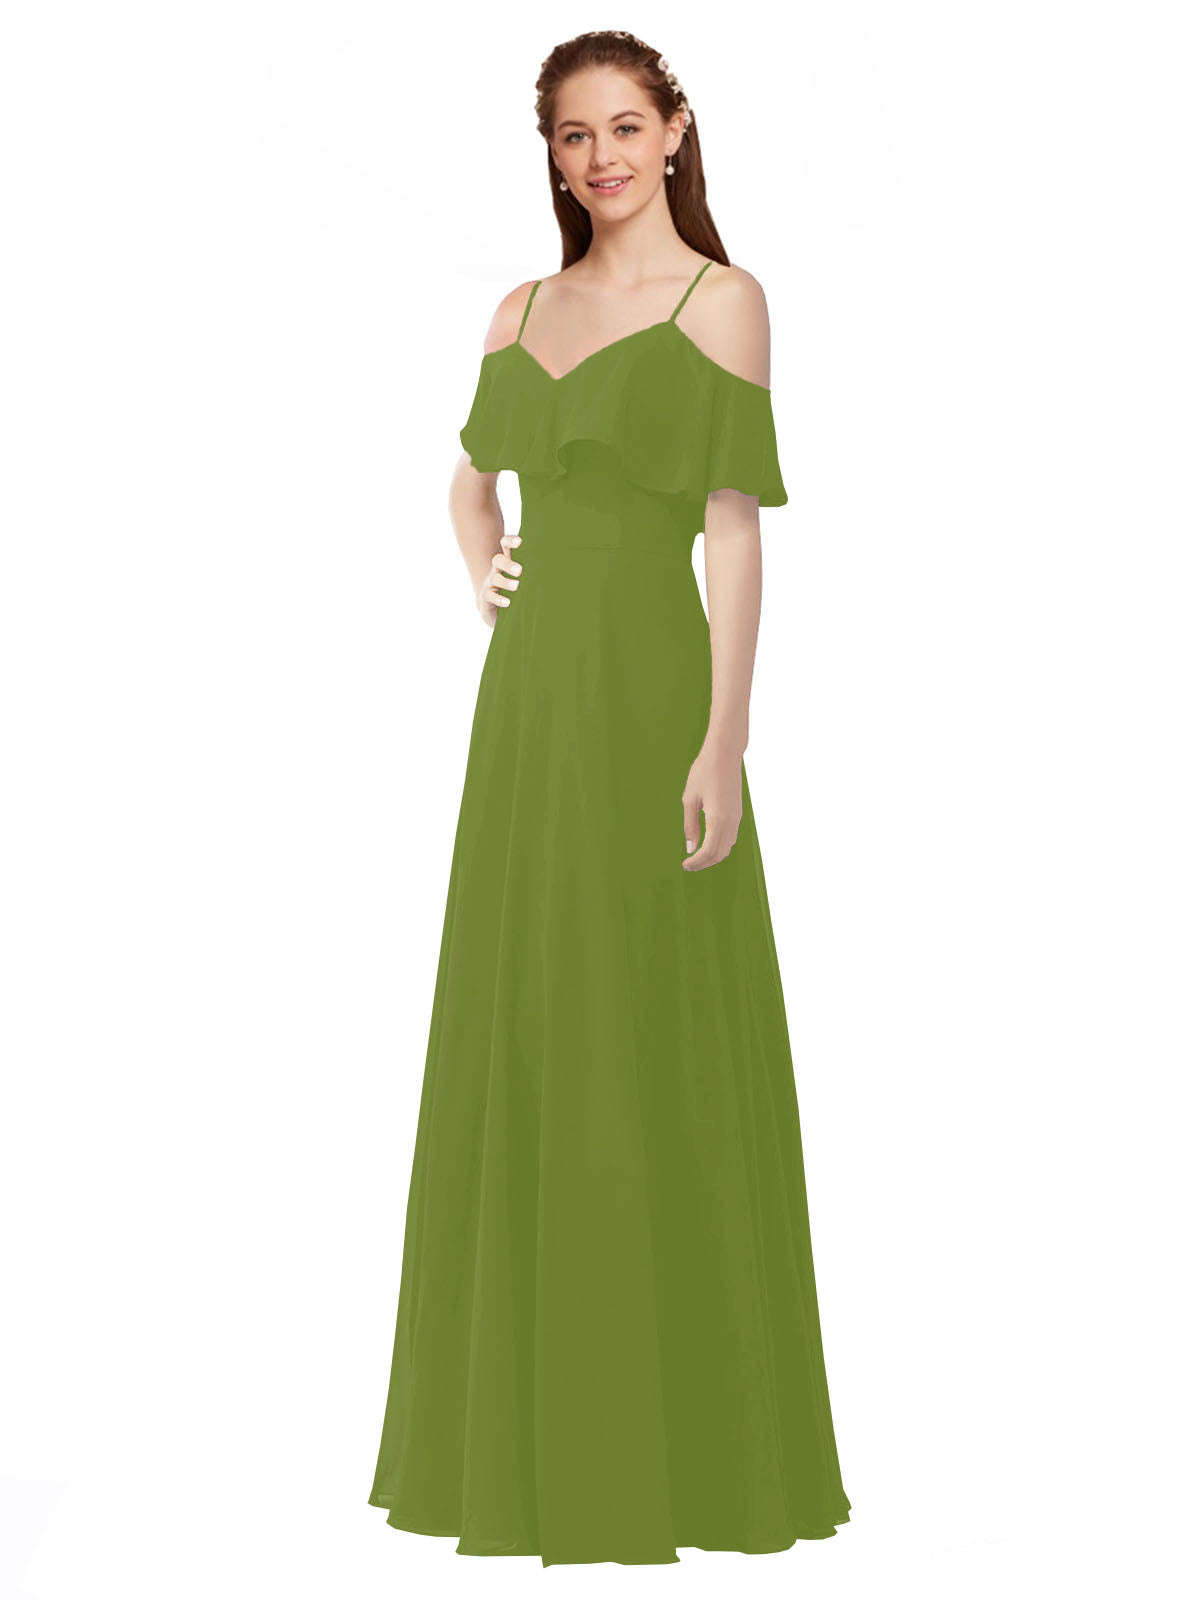 Olive Green A-Line Off the Shoulder V-Neck Sleeveless Long Bridesmaid Dress Marianna